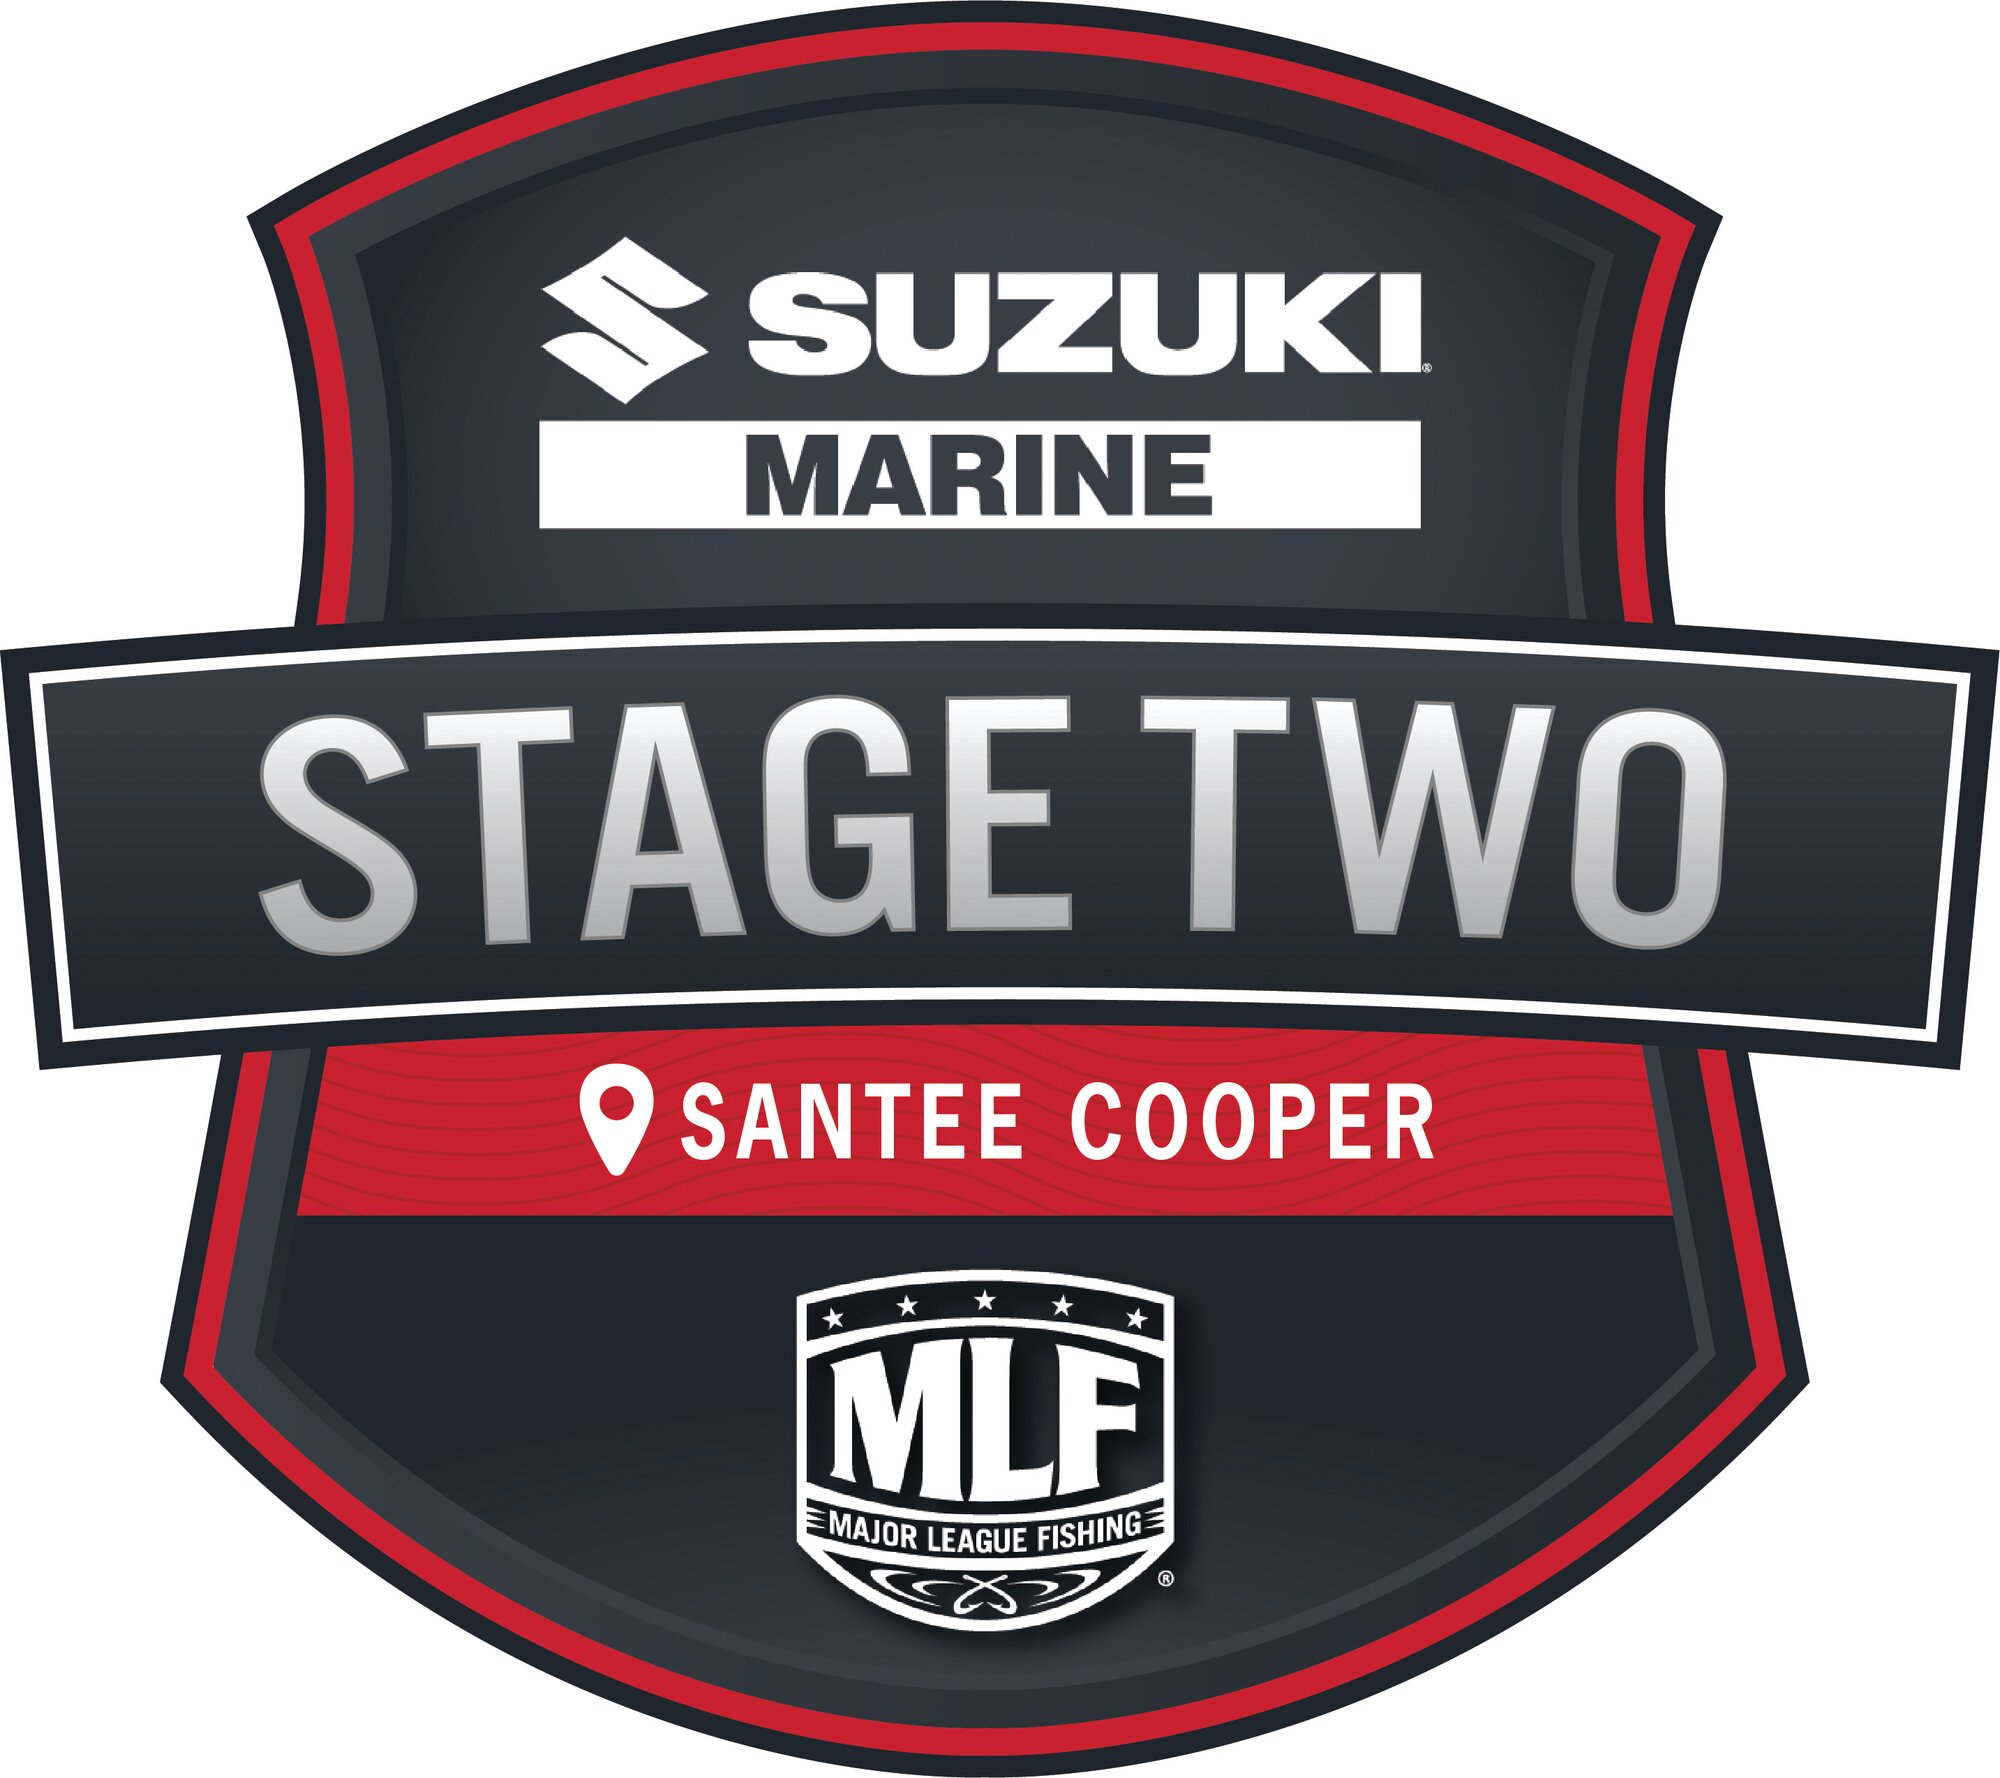 MLF Bass Pro Tour begins Suzuki Stage 2 at Santee Cooper Lakes